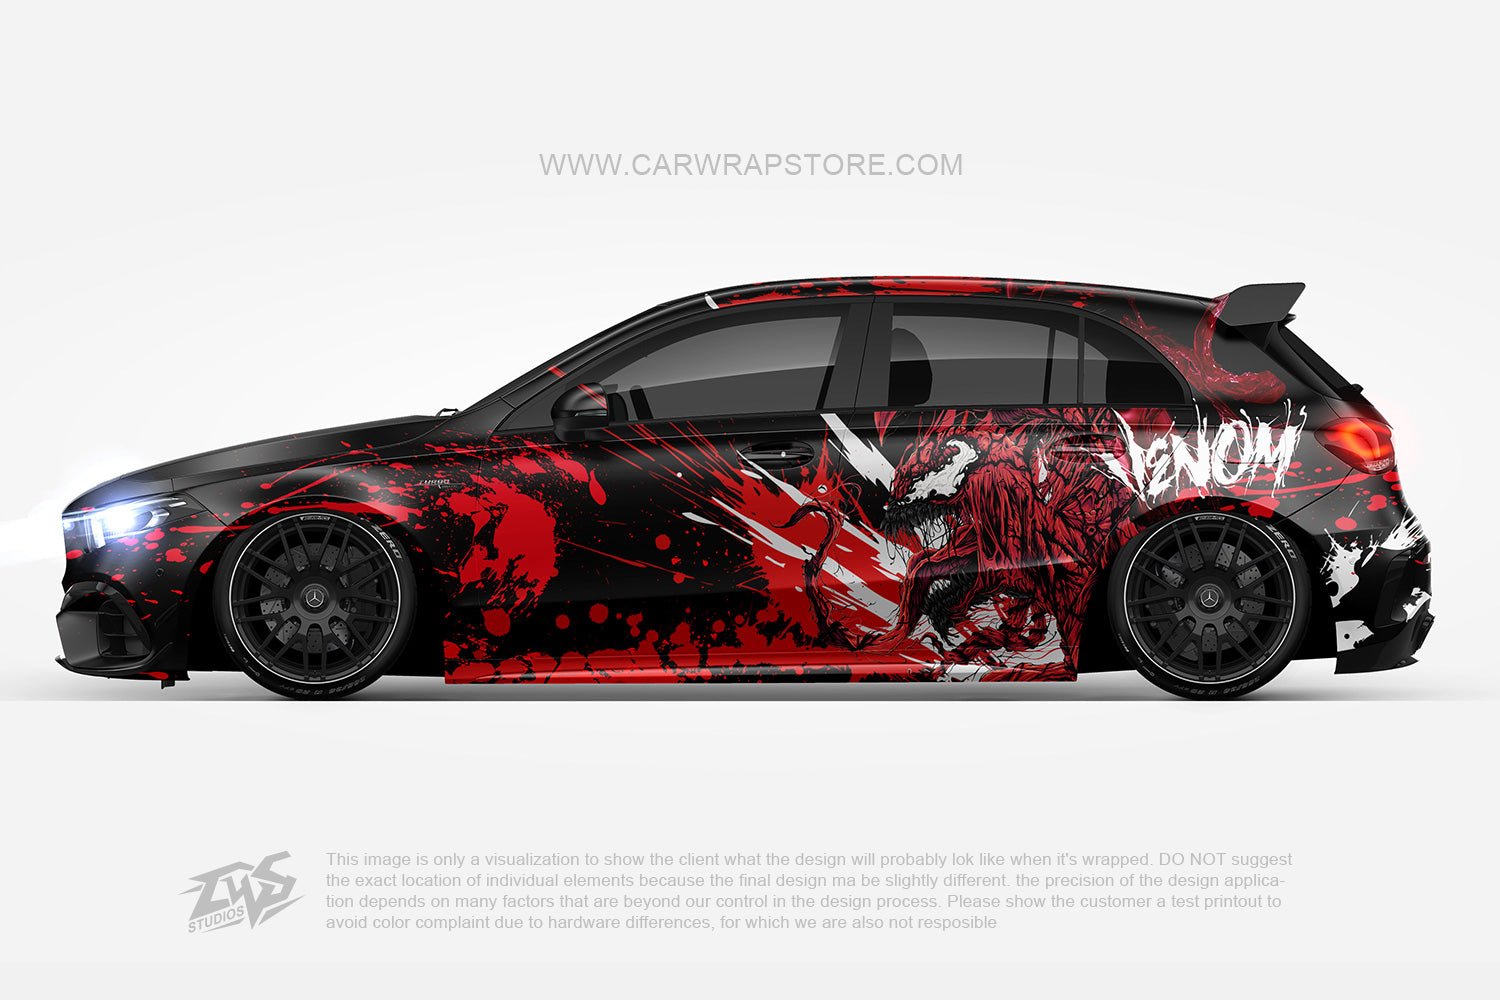 Venom【VN-06】 - Car Wrap Store